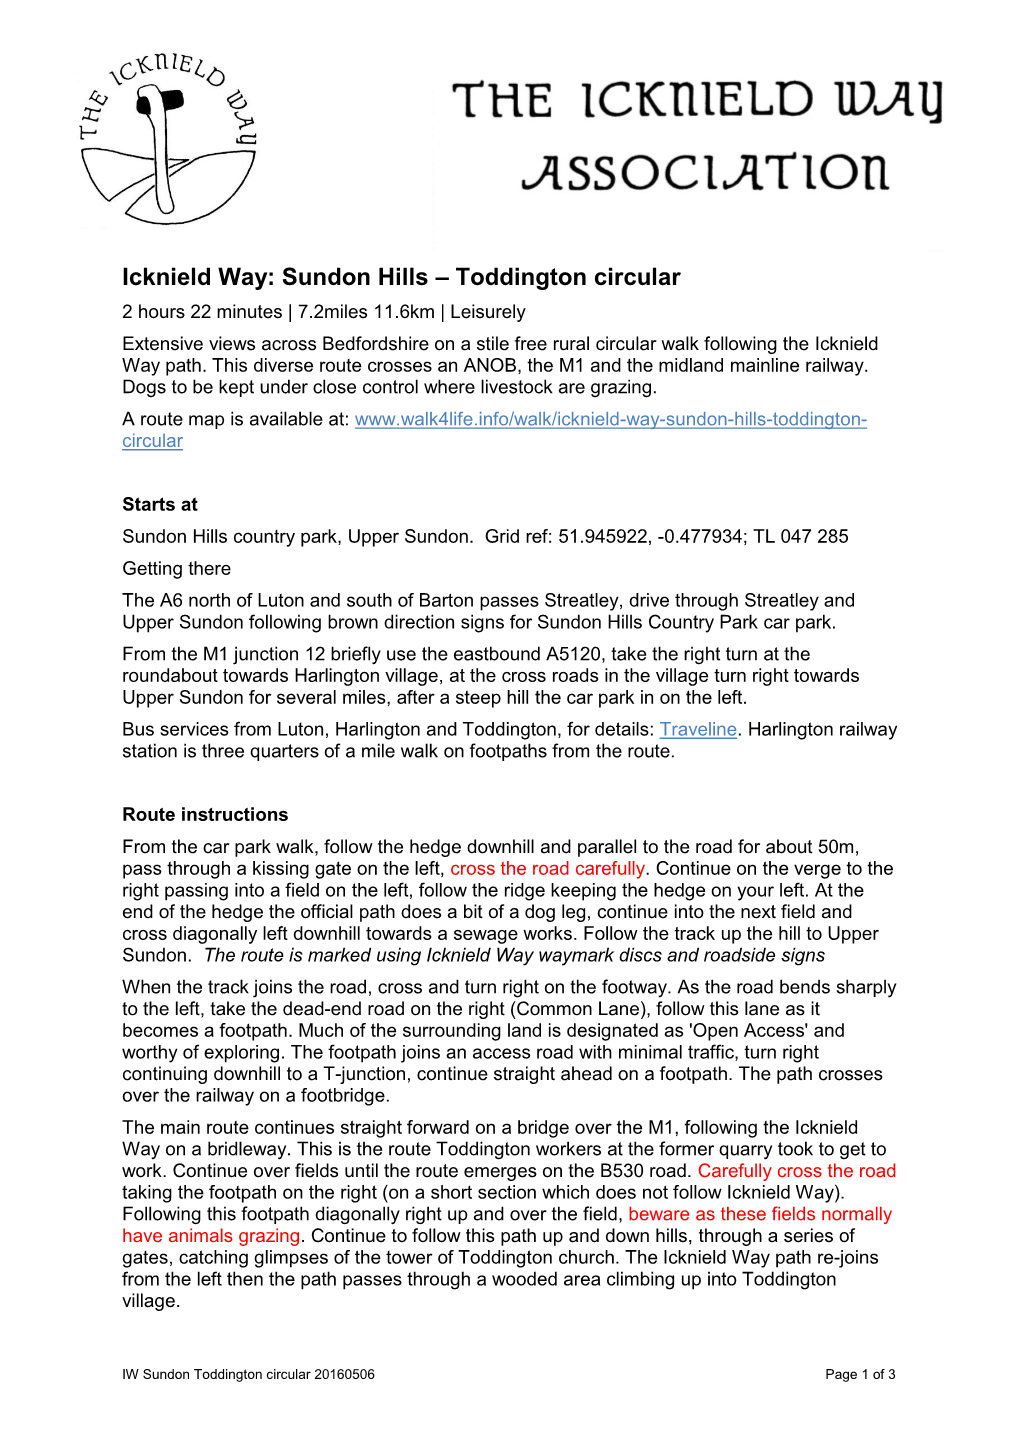 Icknield Way: Sundon Hills – Toddington Circular